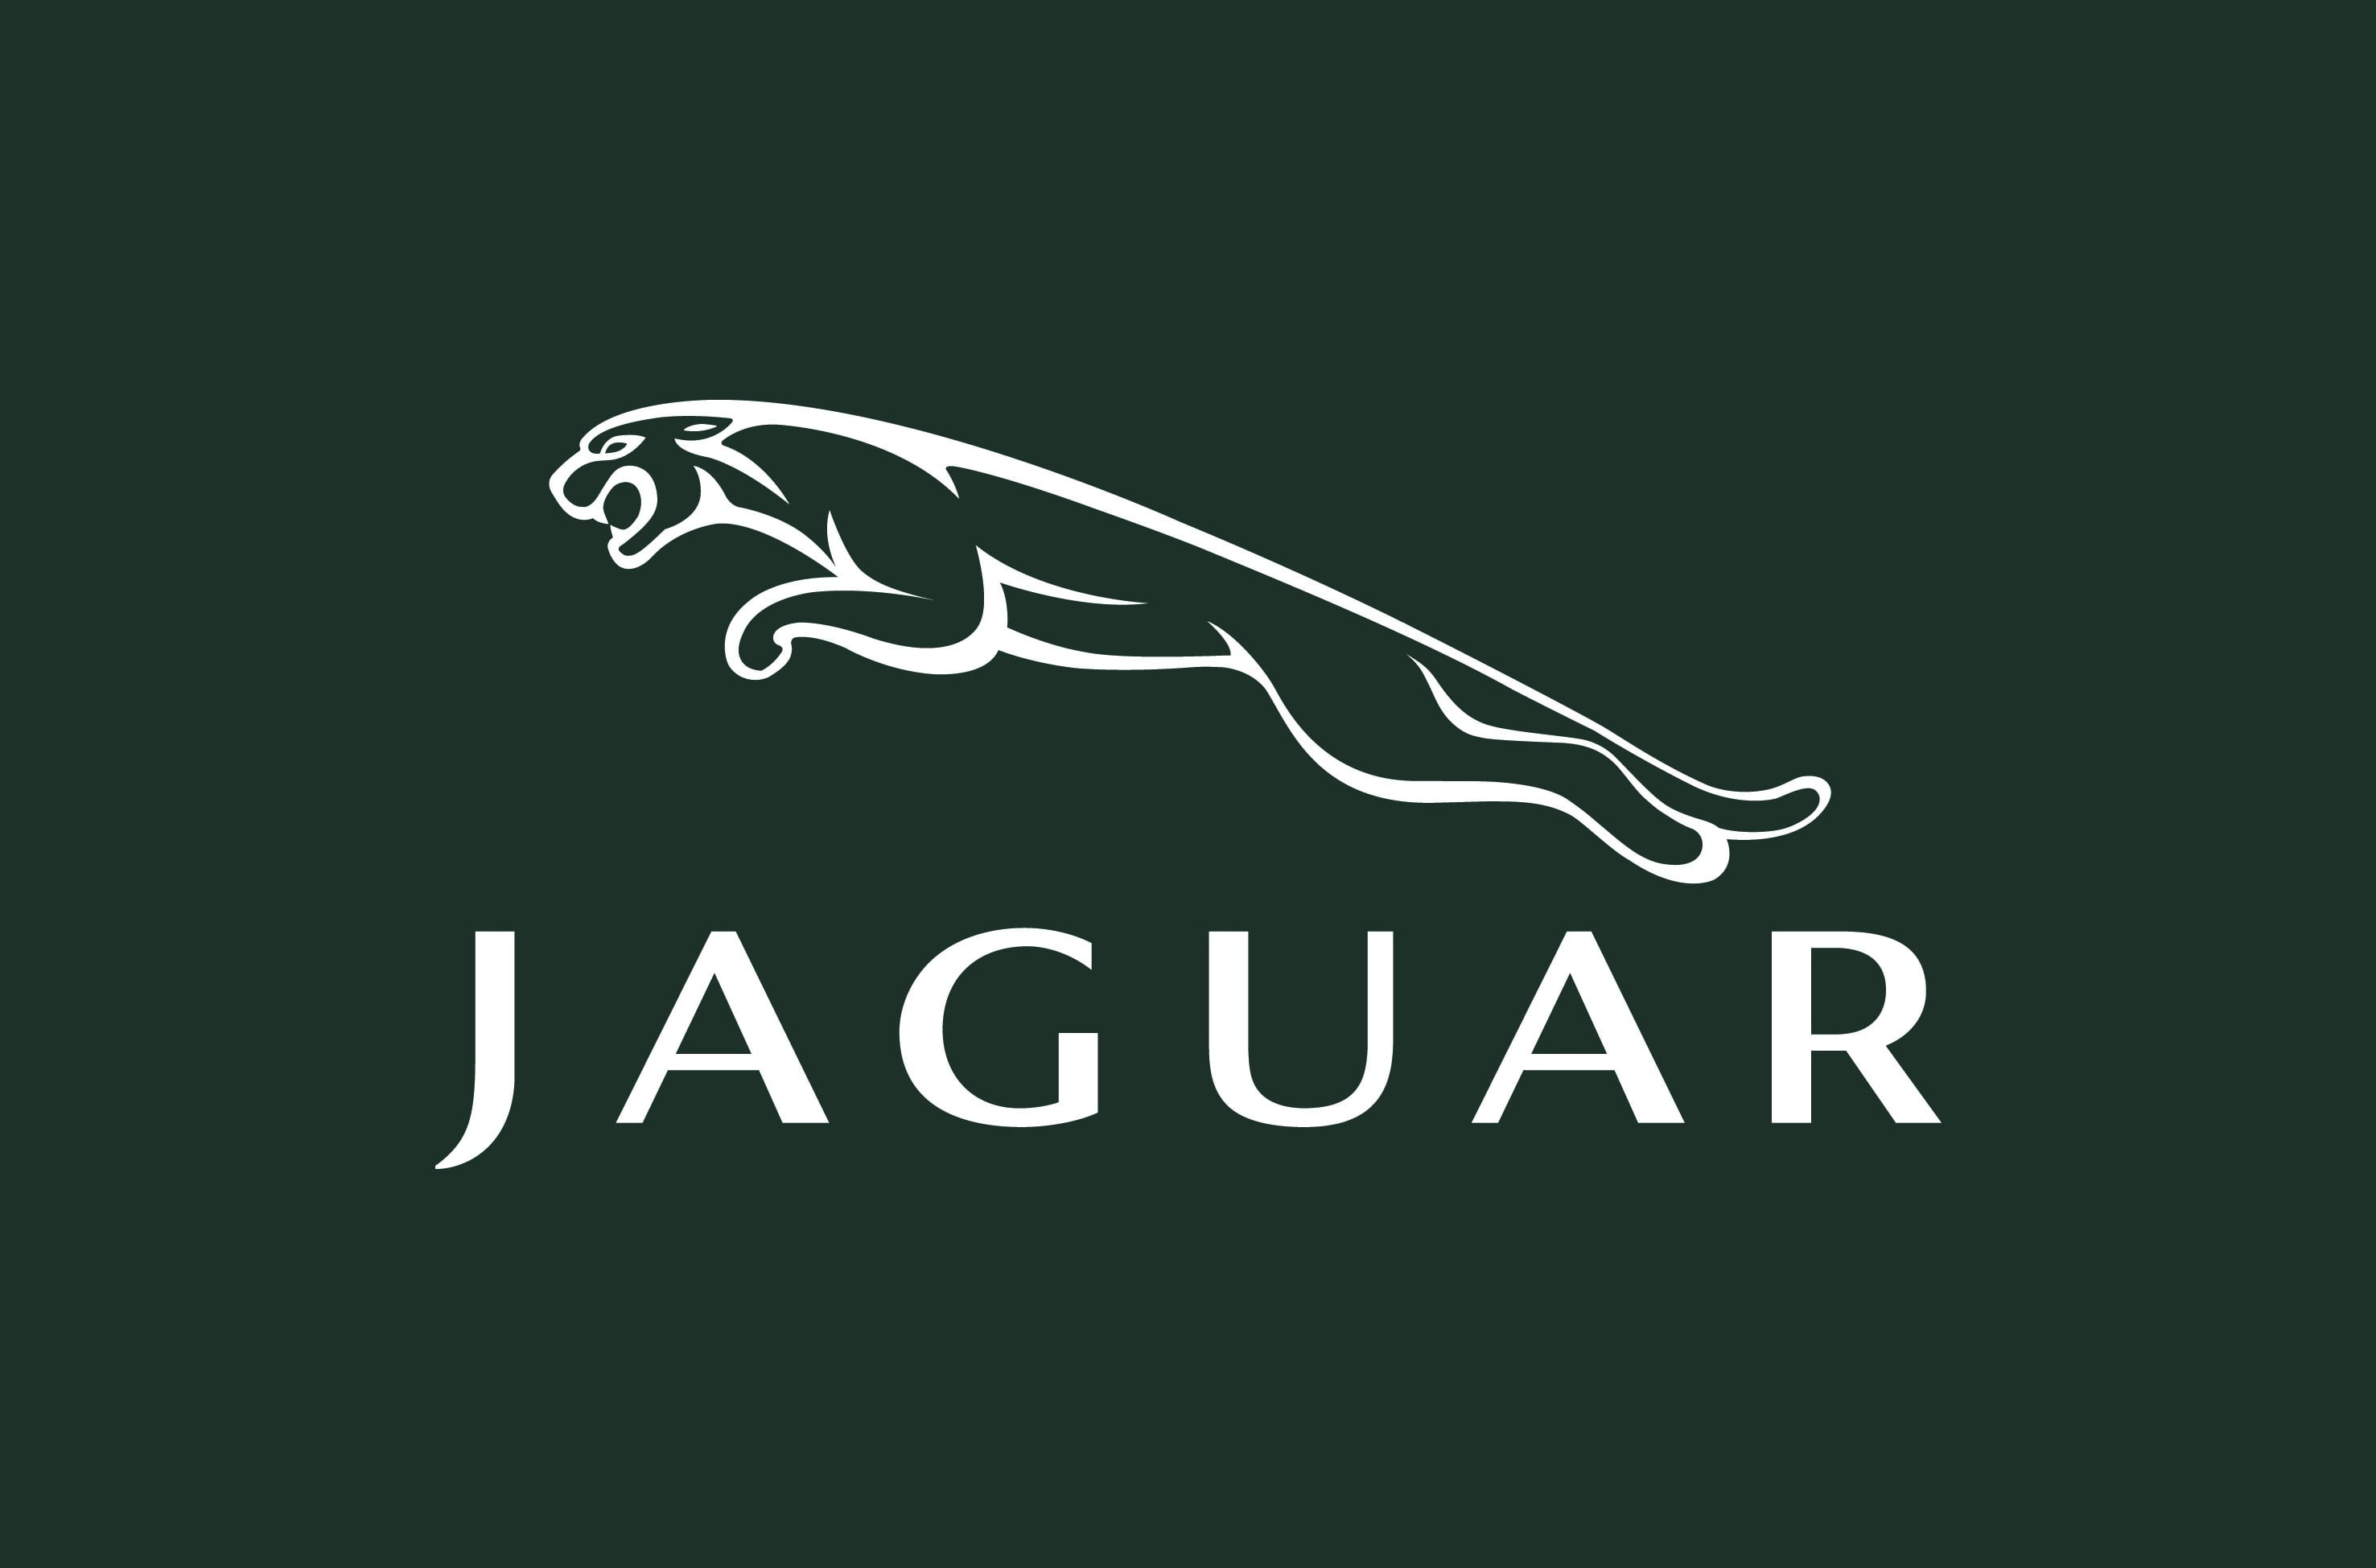 the inscription, Jaguar, logo, green, fon